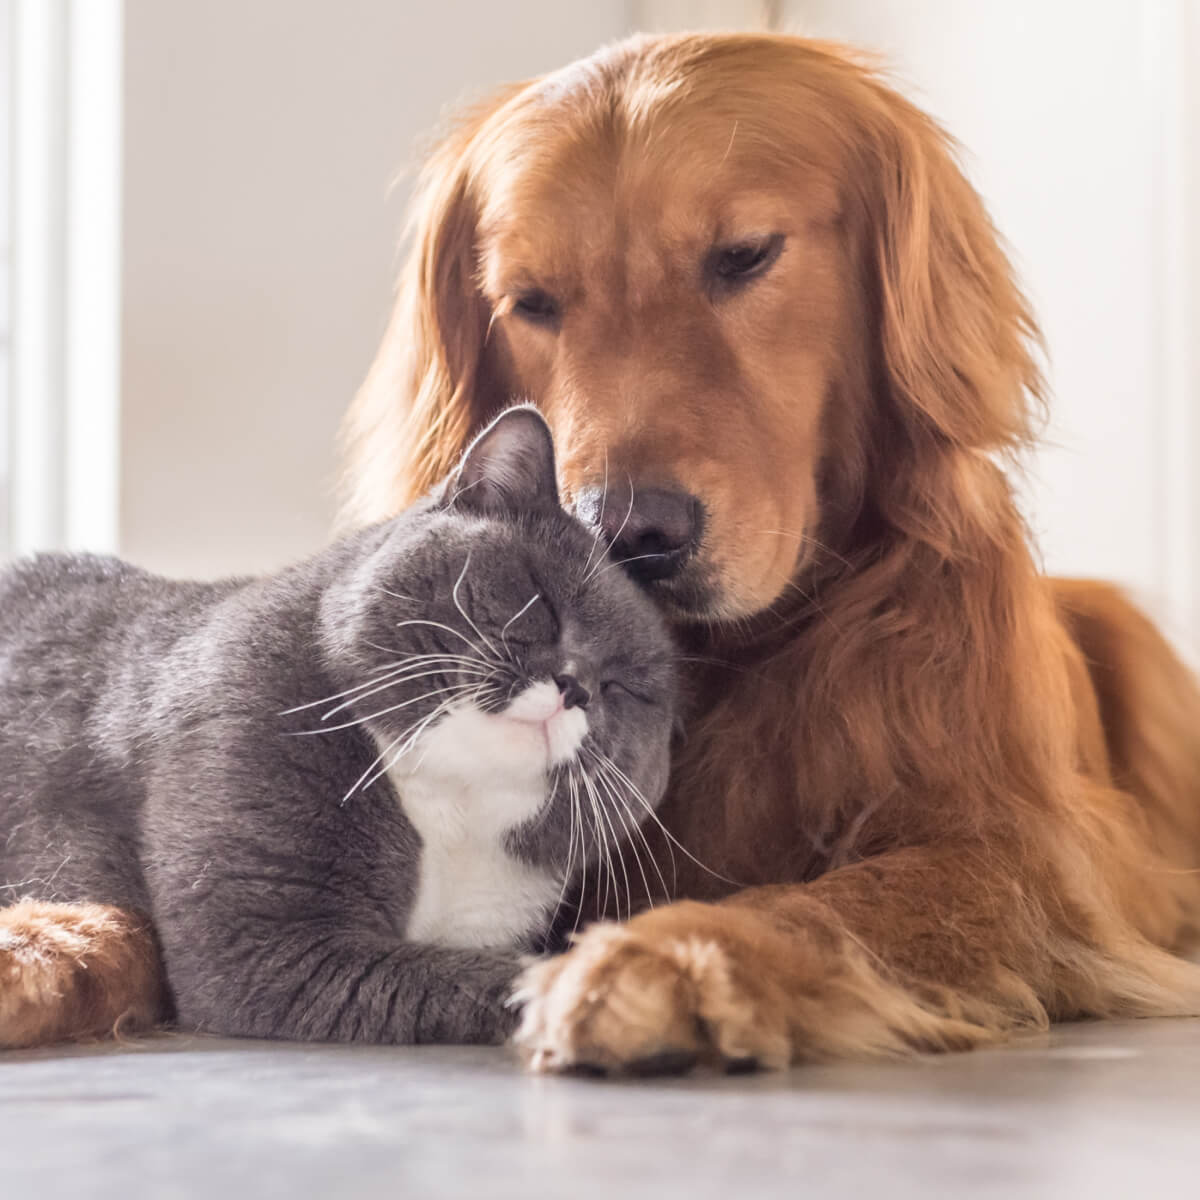 Dog cat cuddling each other